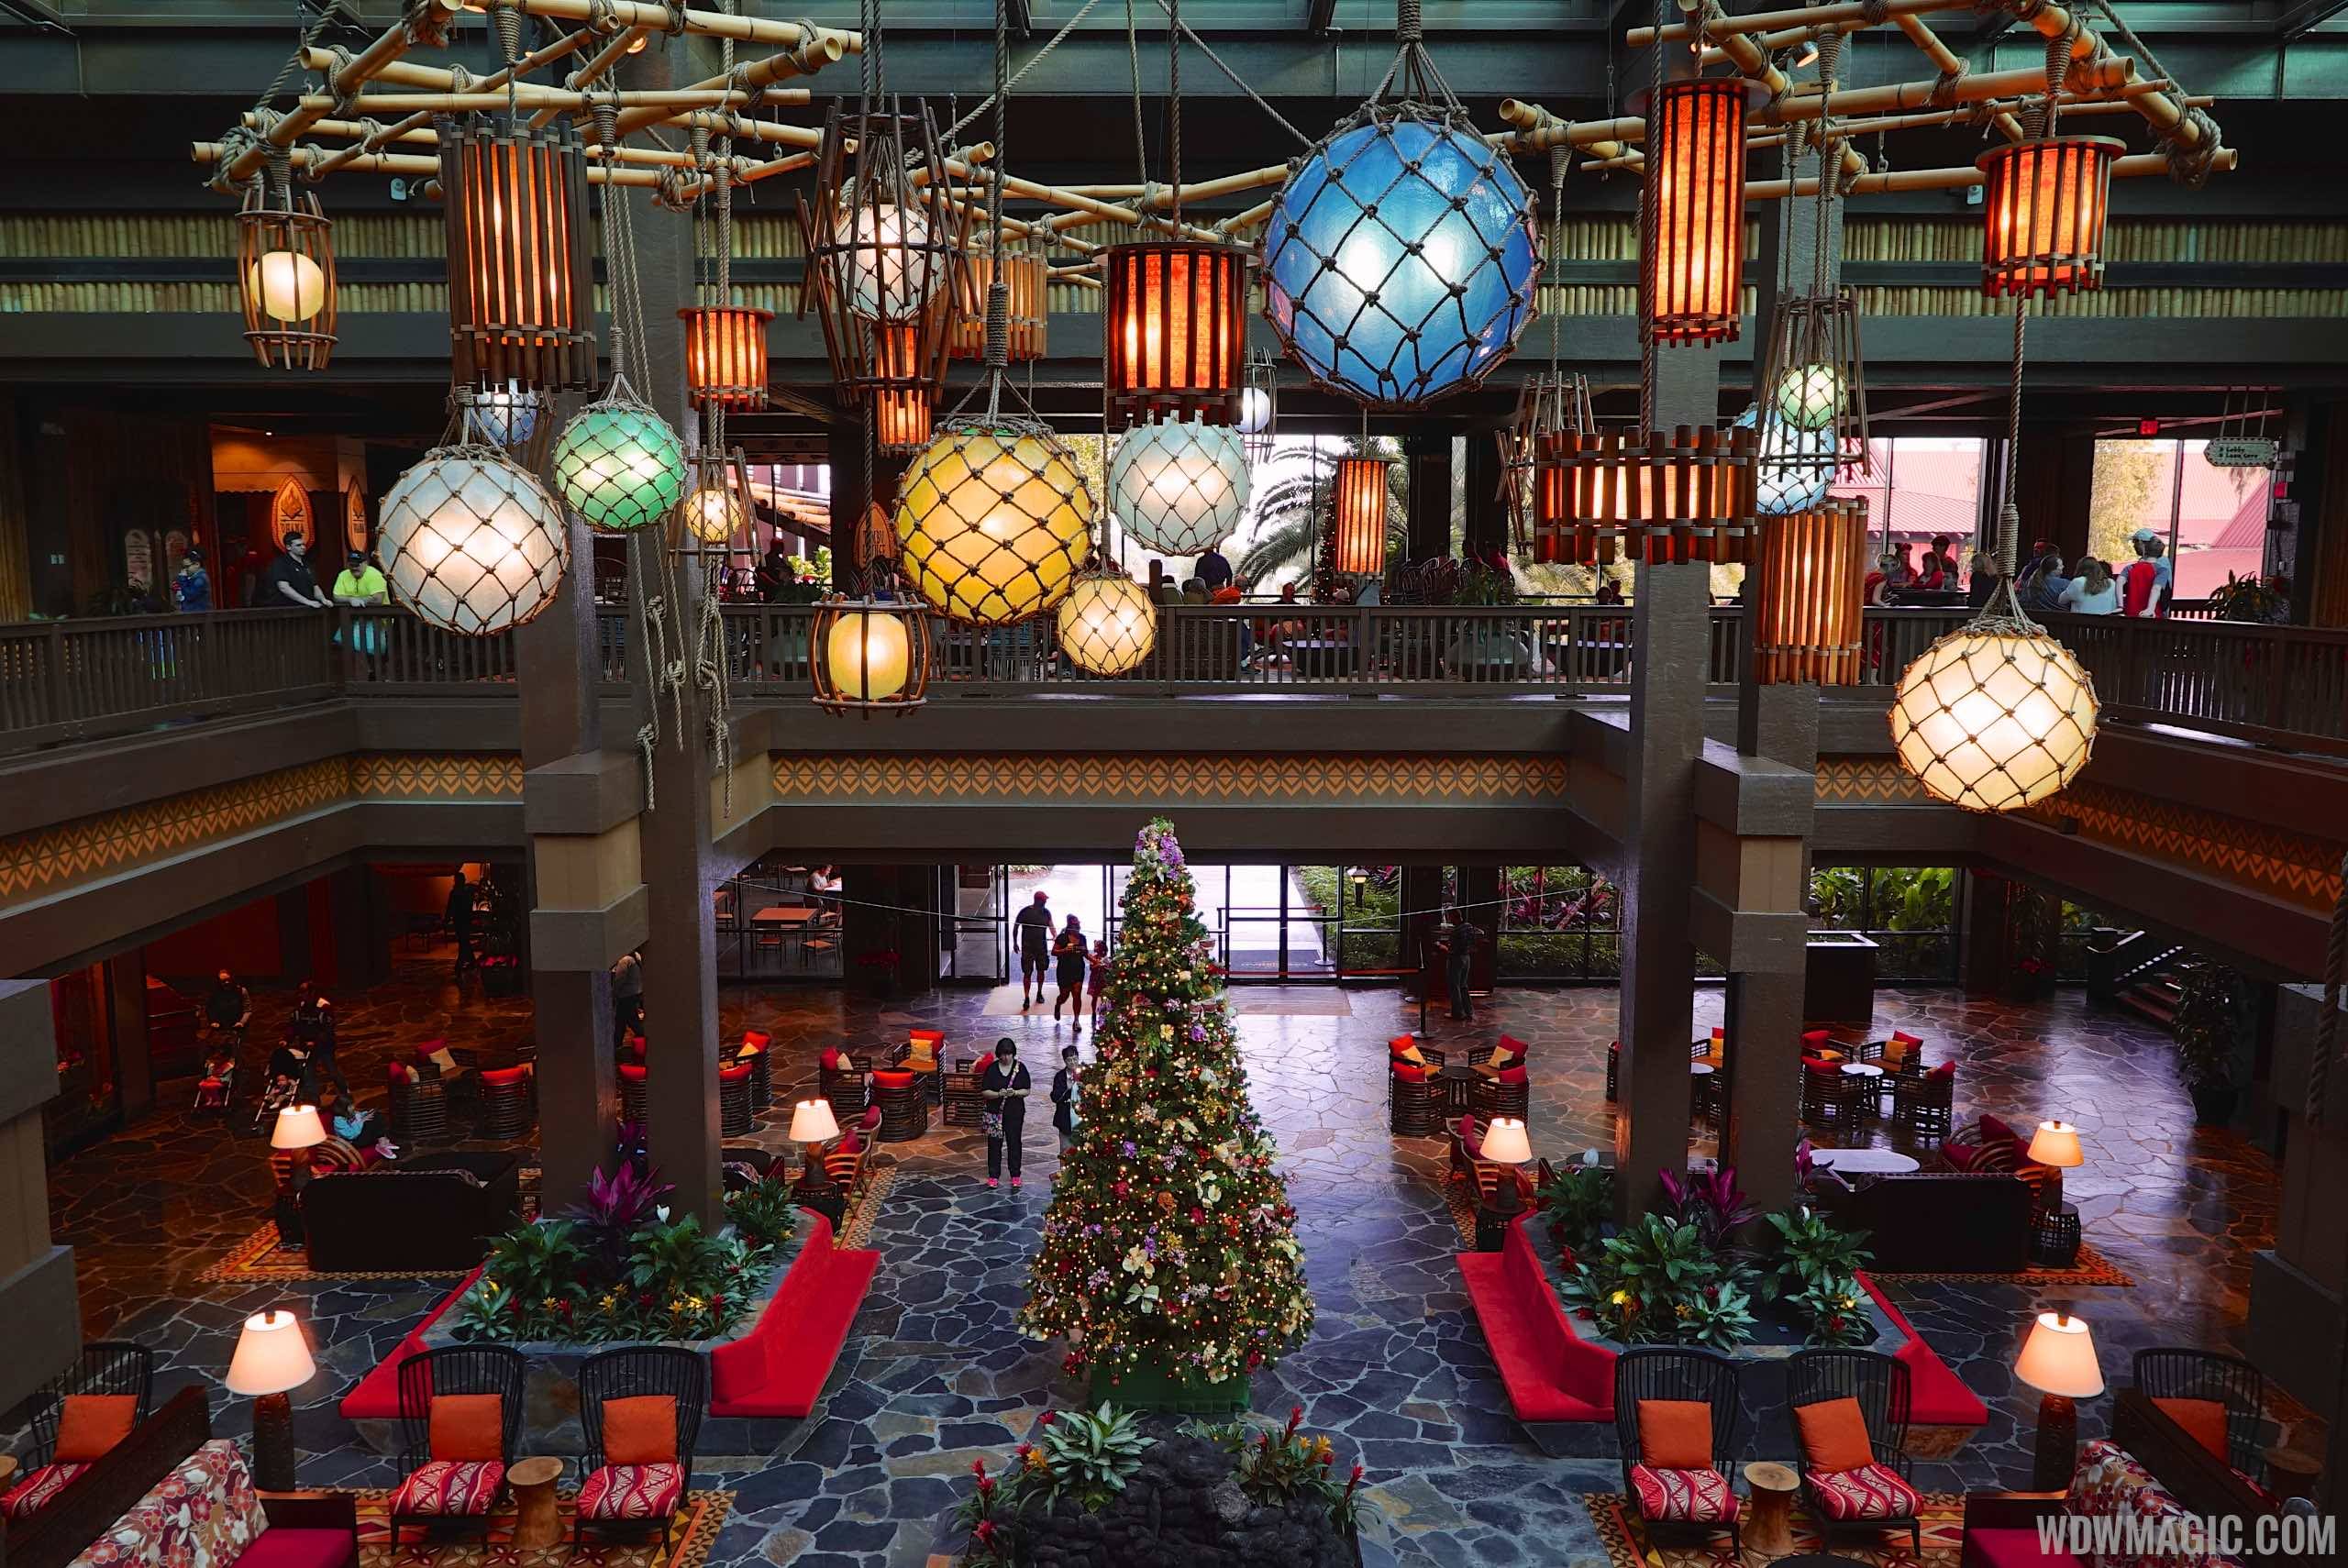 PHOTOS - A tour of the new Polynesian Village Resort lobby